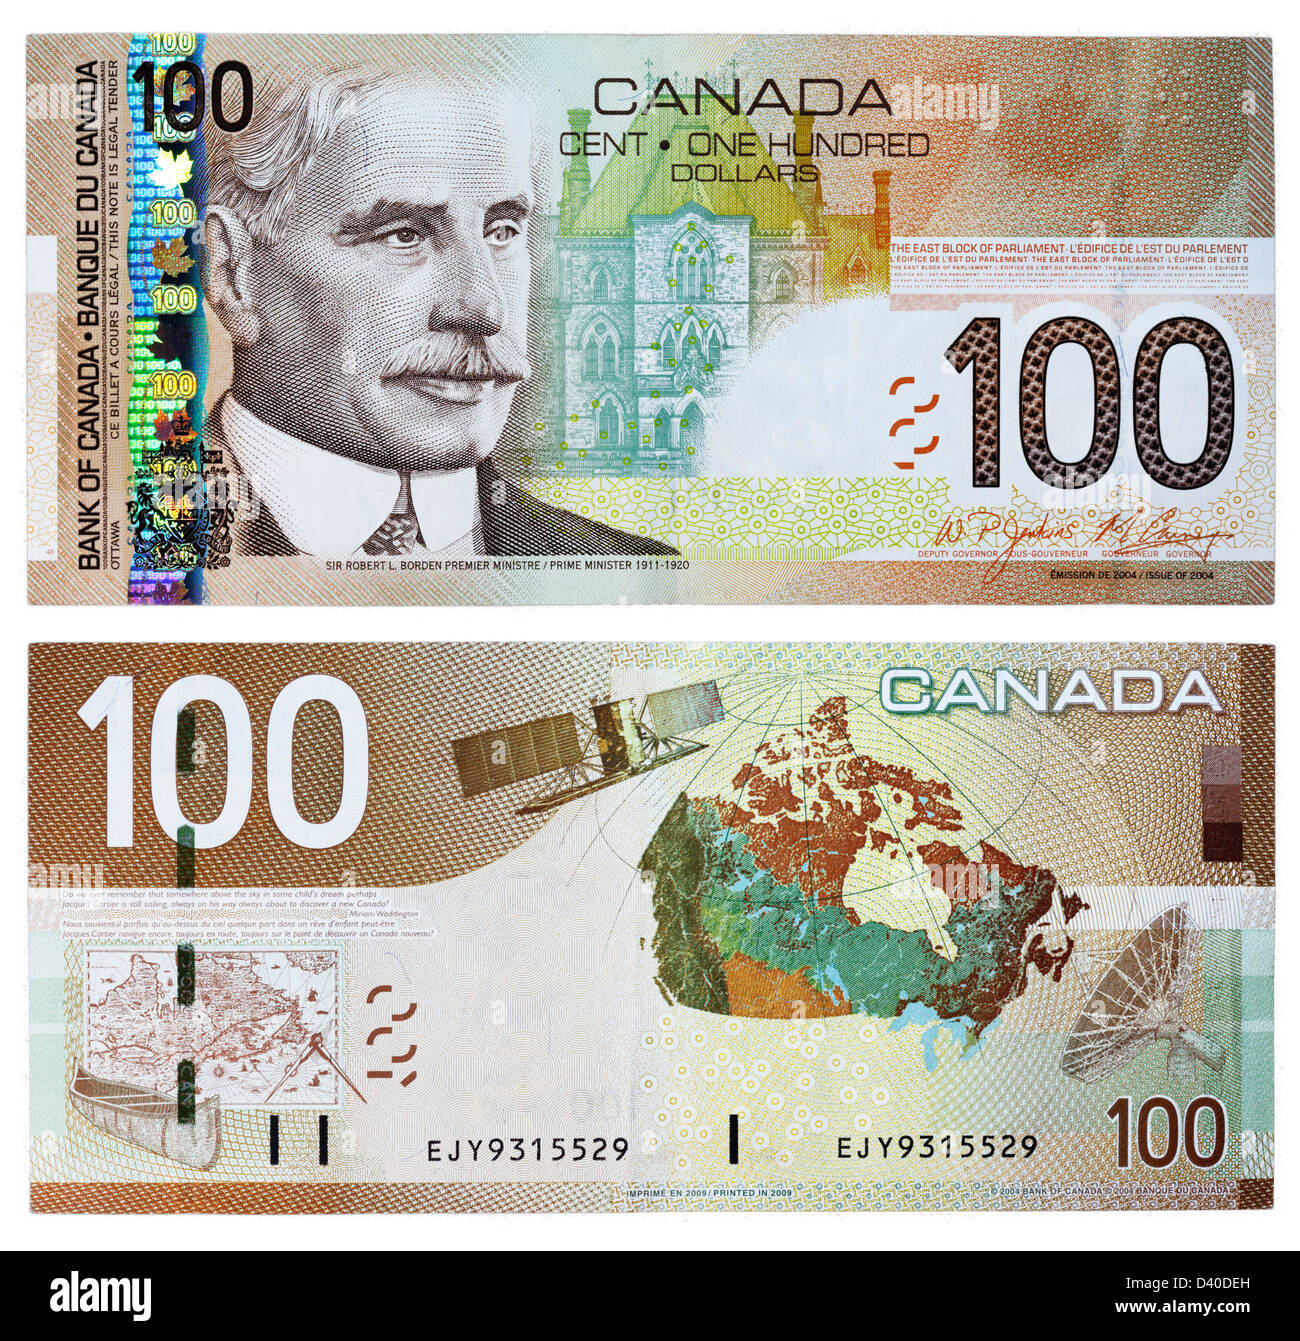 100 Dollars banknote, Sir Robert Borden, prime minister (1911-1920), Canada, 2004 Stock Photo